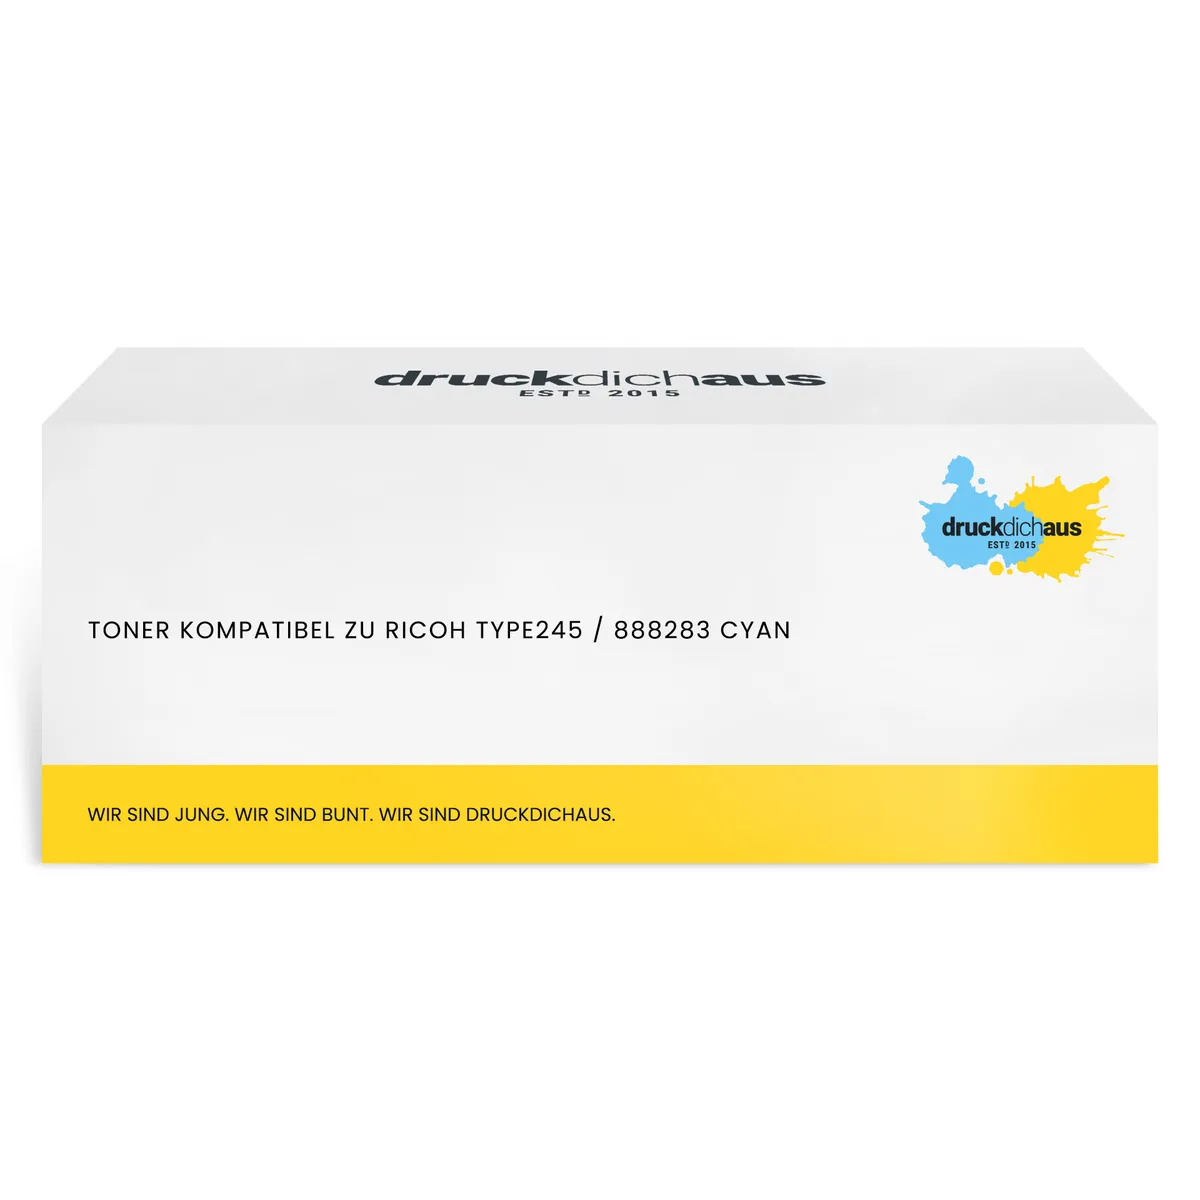 Toner kompatibel zu Ricoh TYPE245 / 888283 cyan